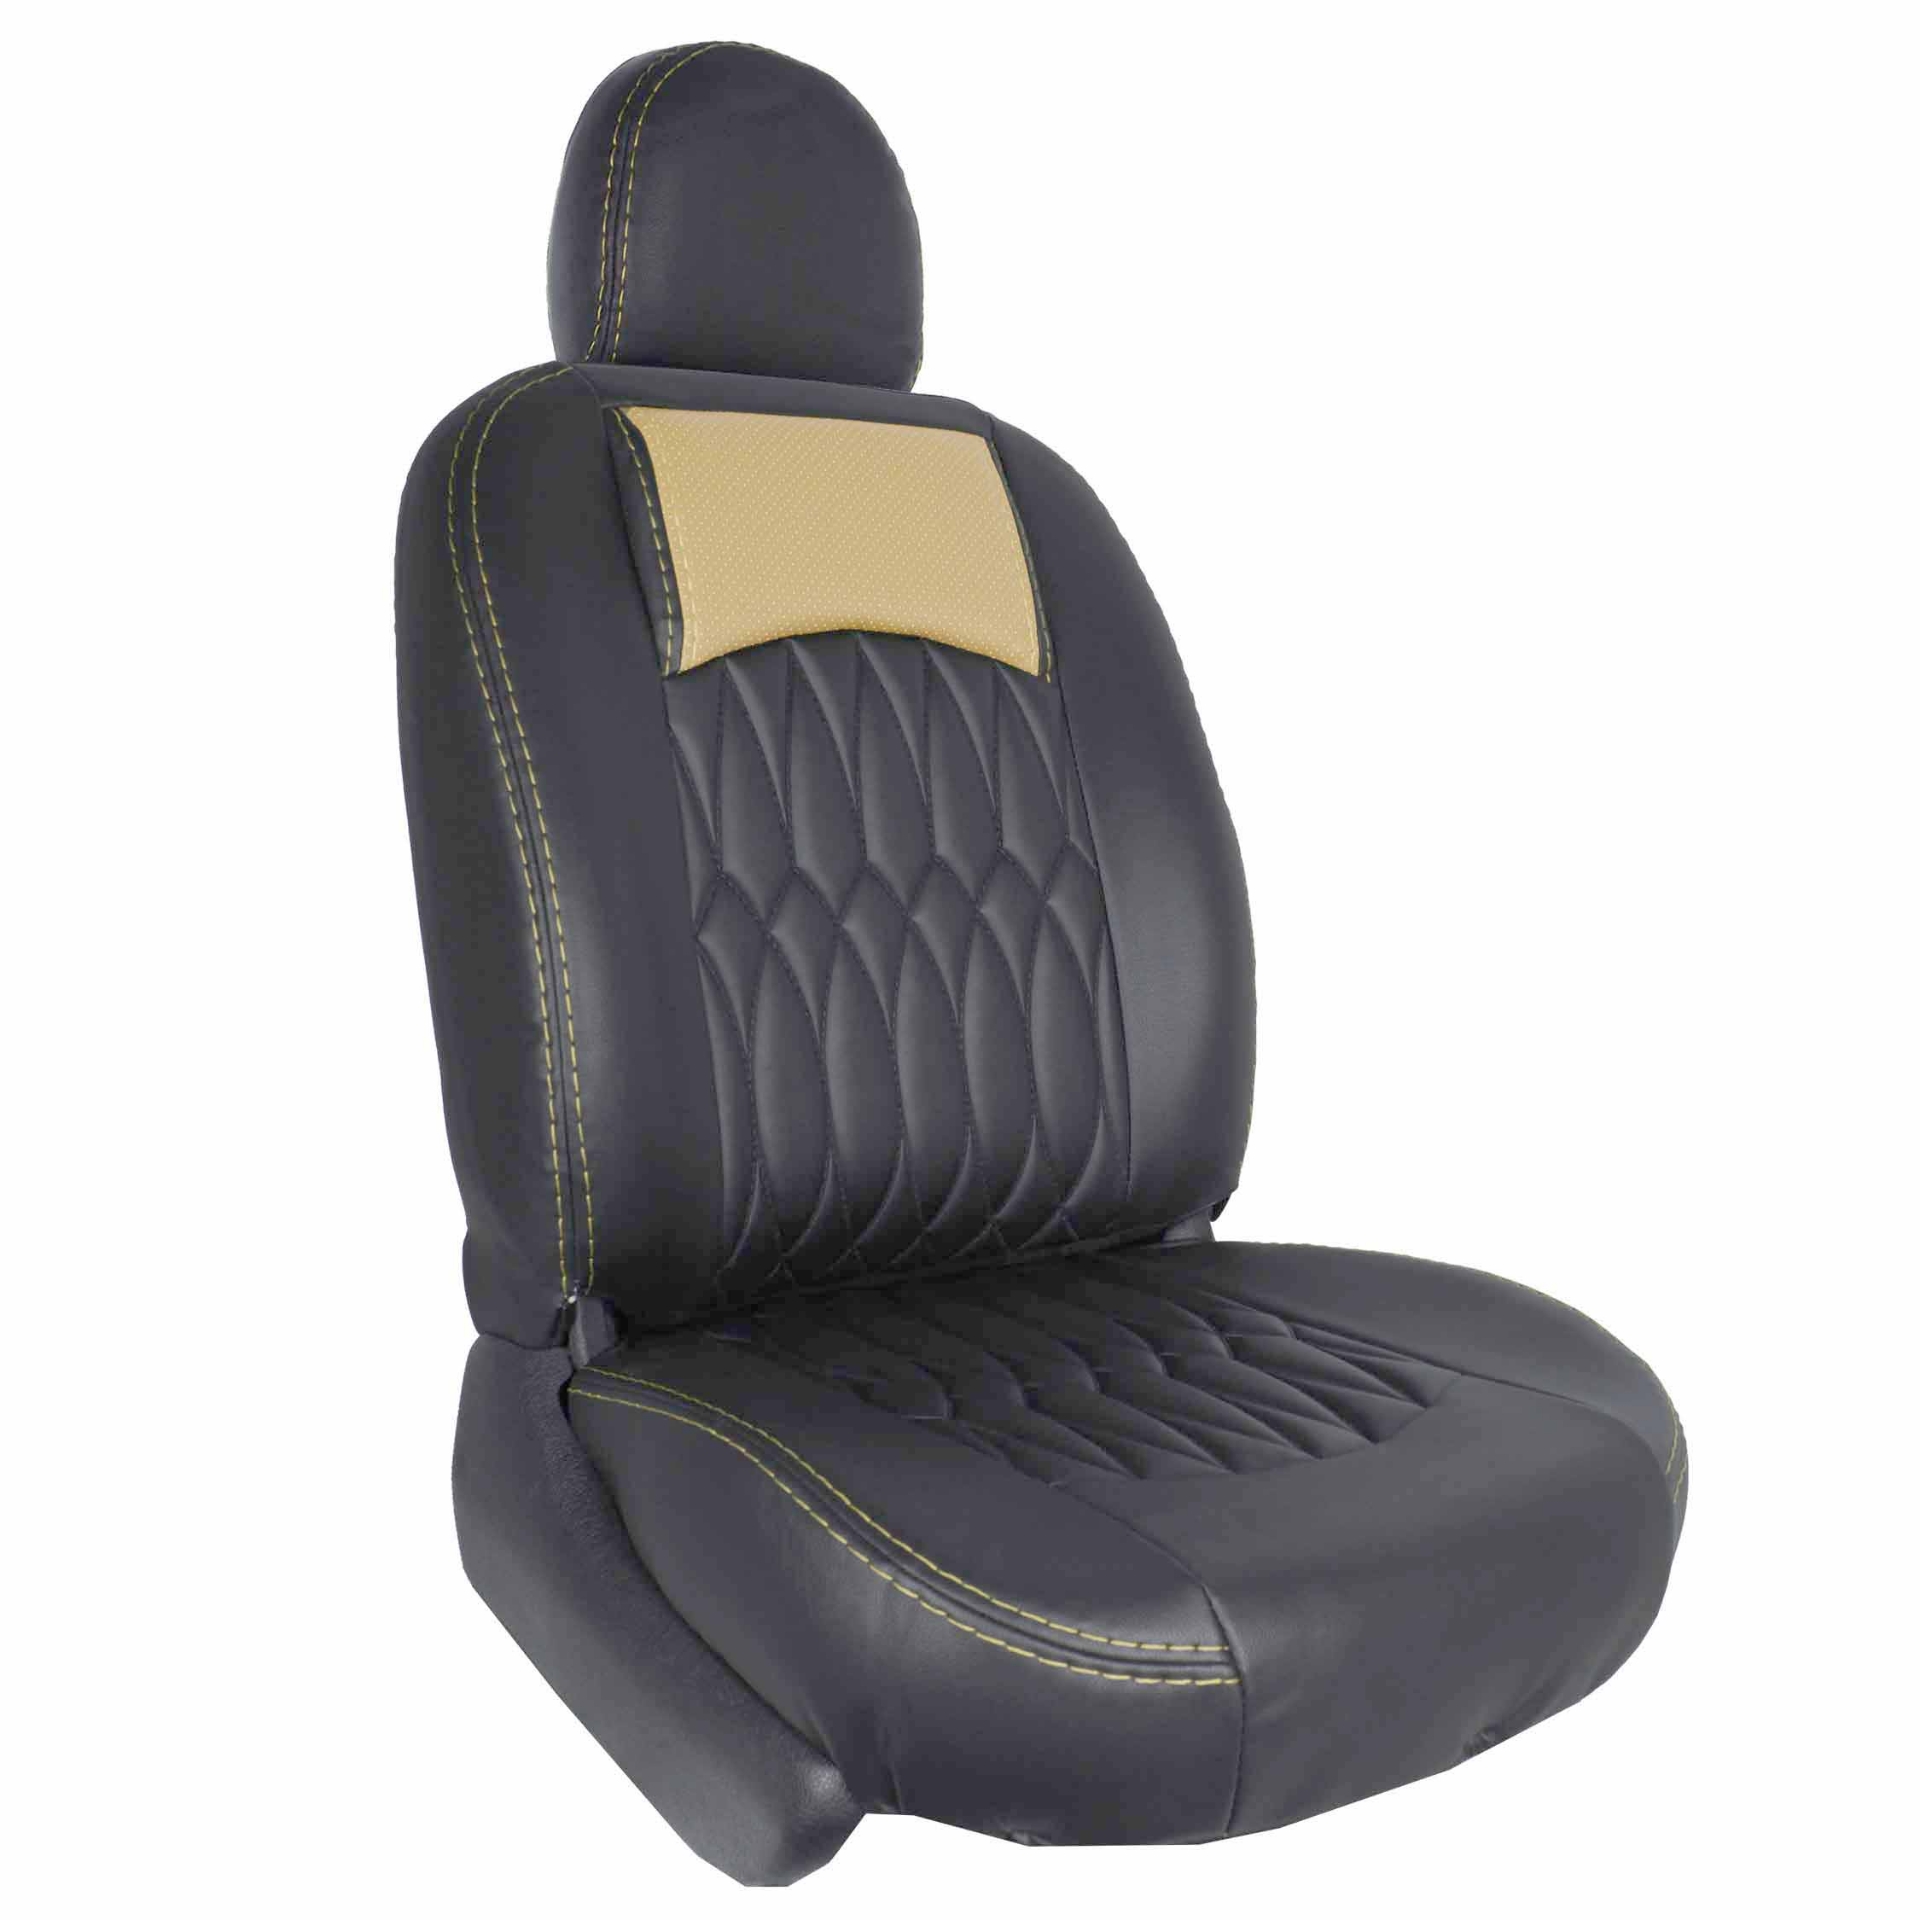 تصویر  روکش صندلی 405 صندلی جدید چرم مصنوعی طرح پورشه جلوه مدل disk